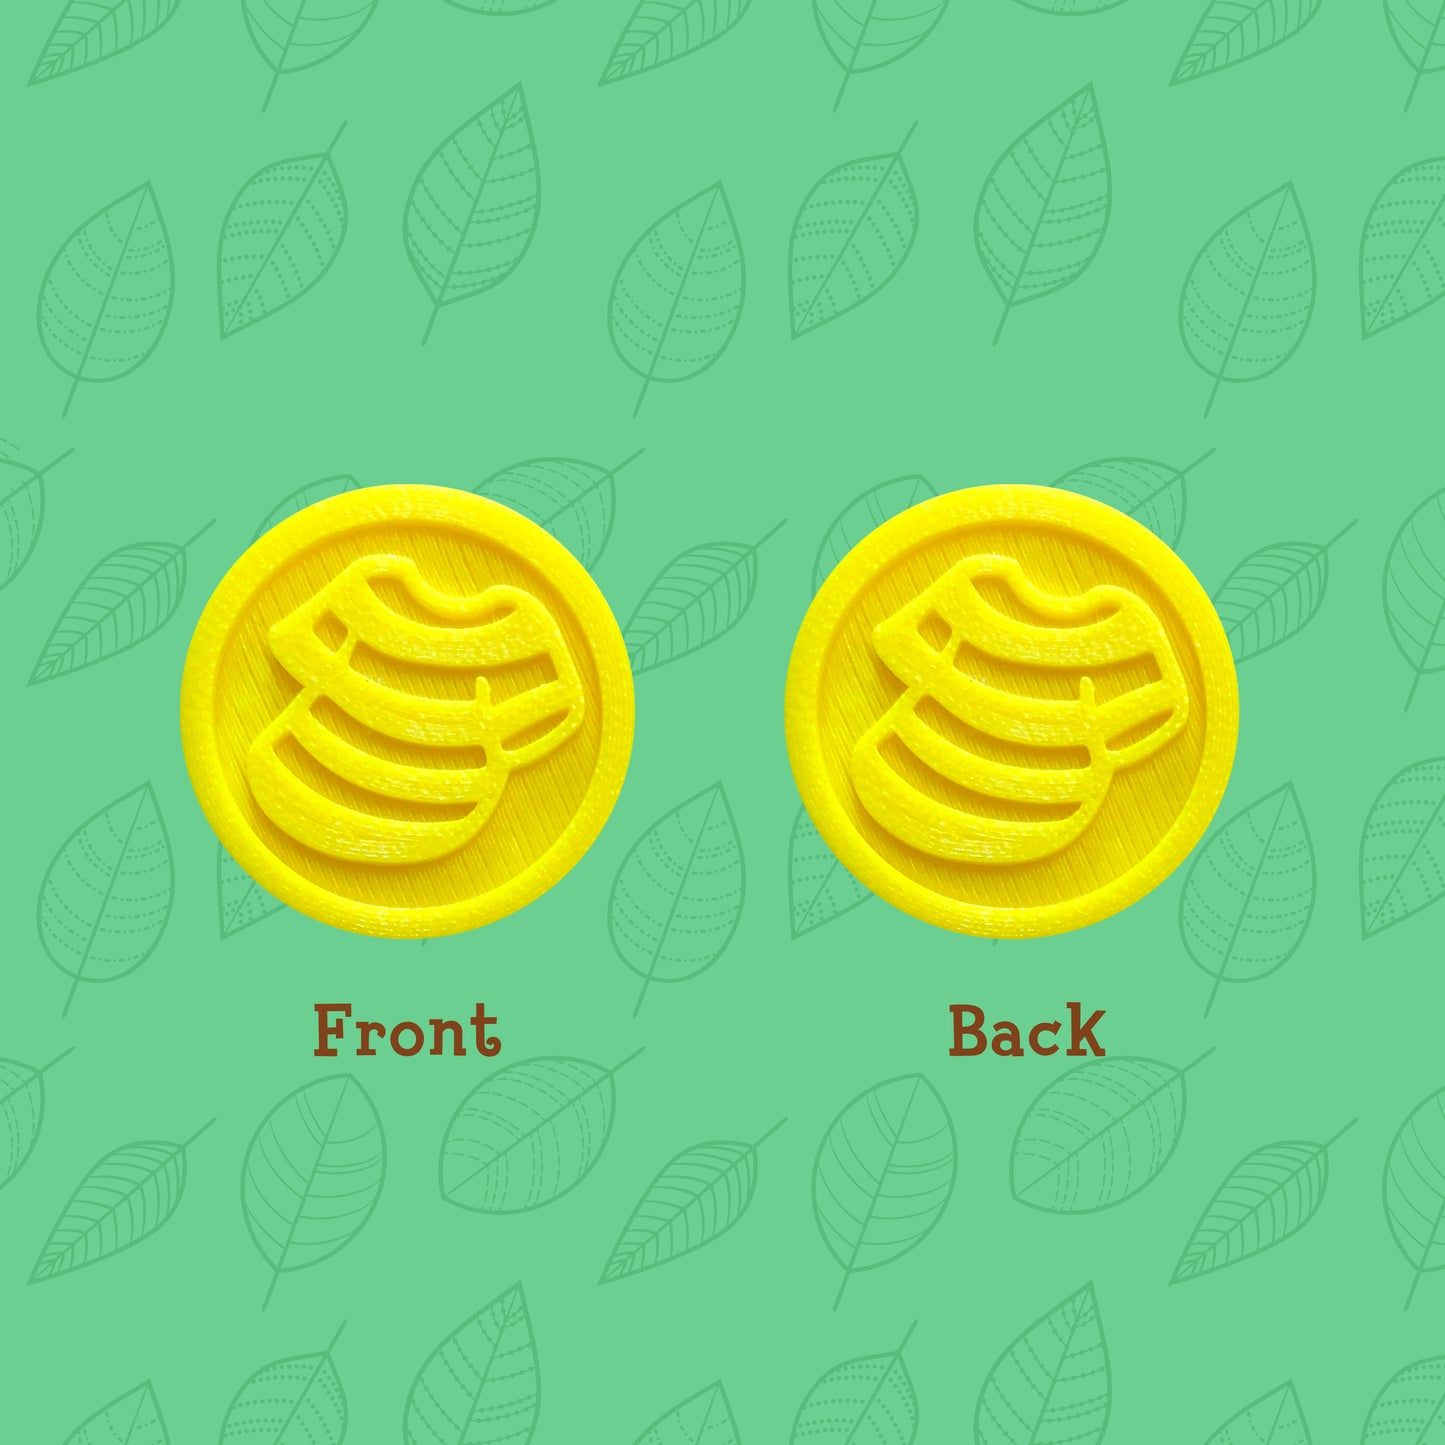 Animal Crossing Replica Coins - Shirt Icons